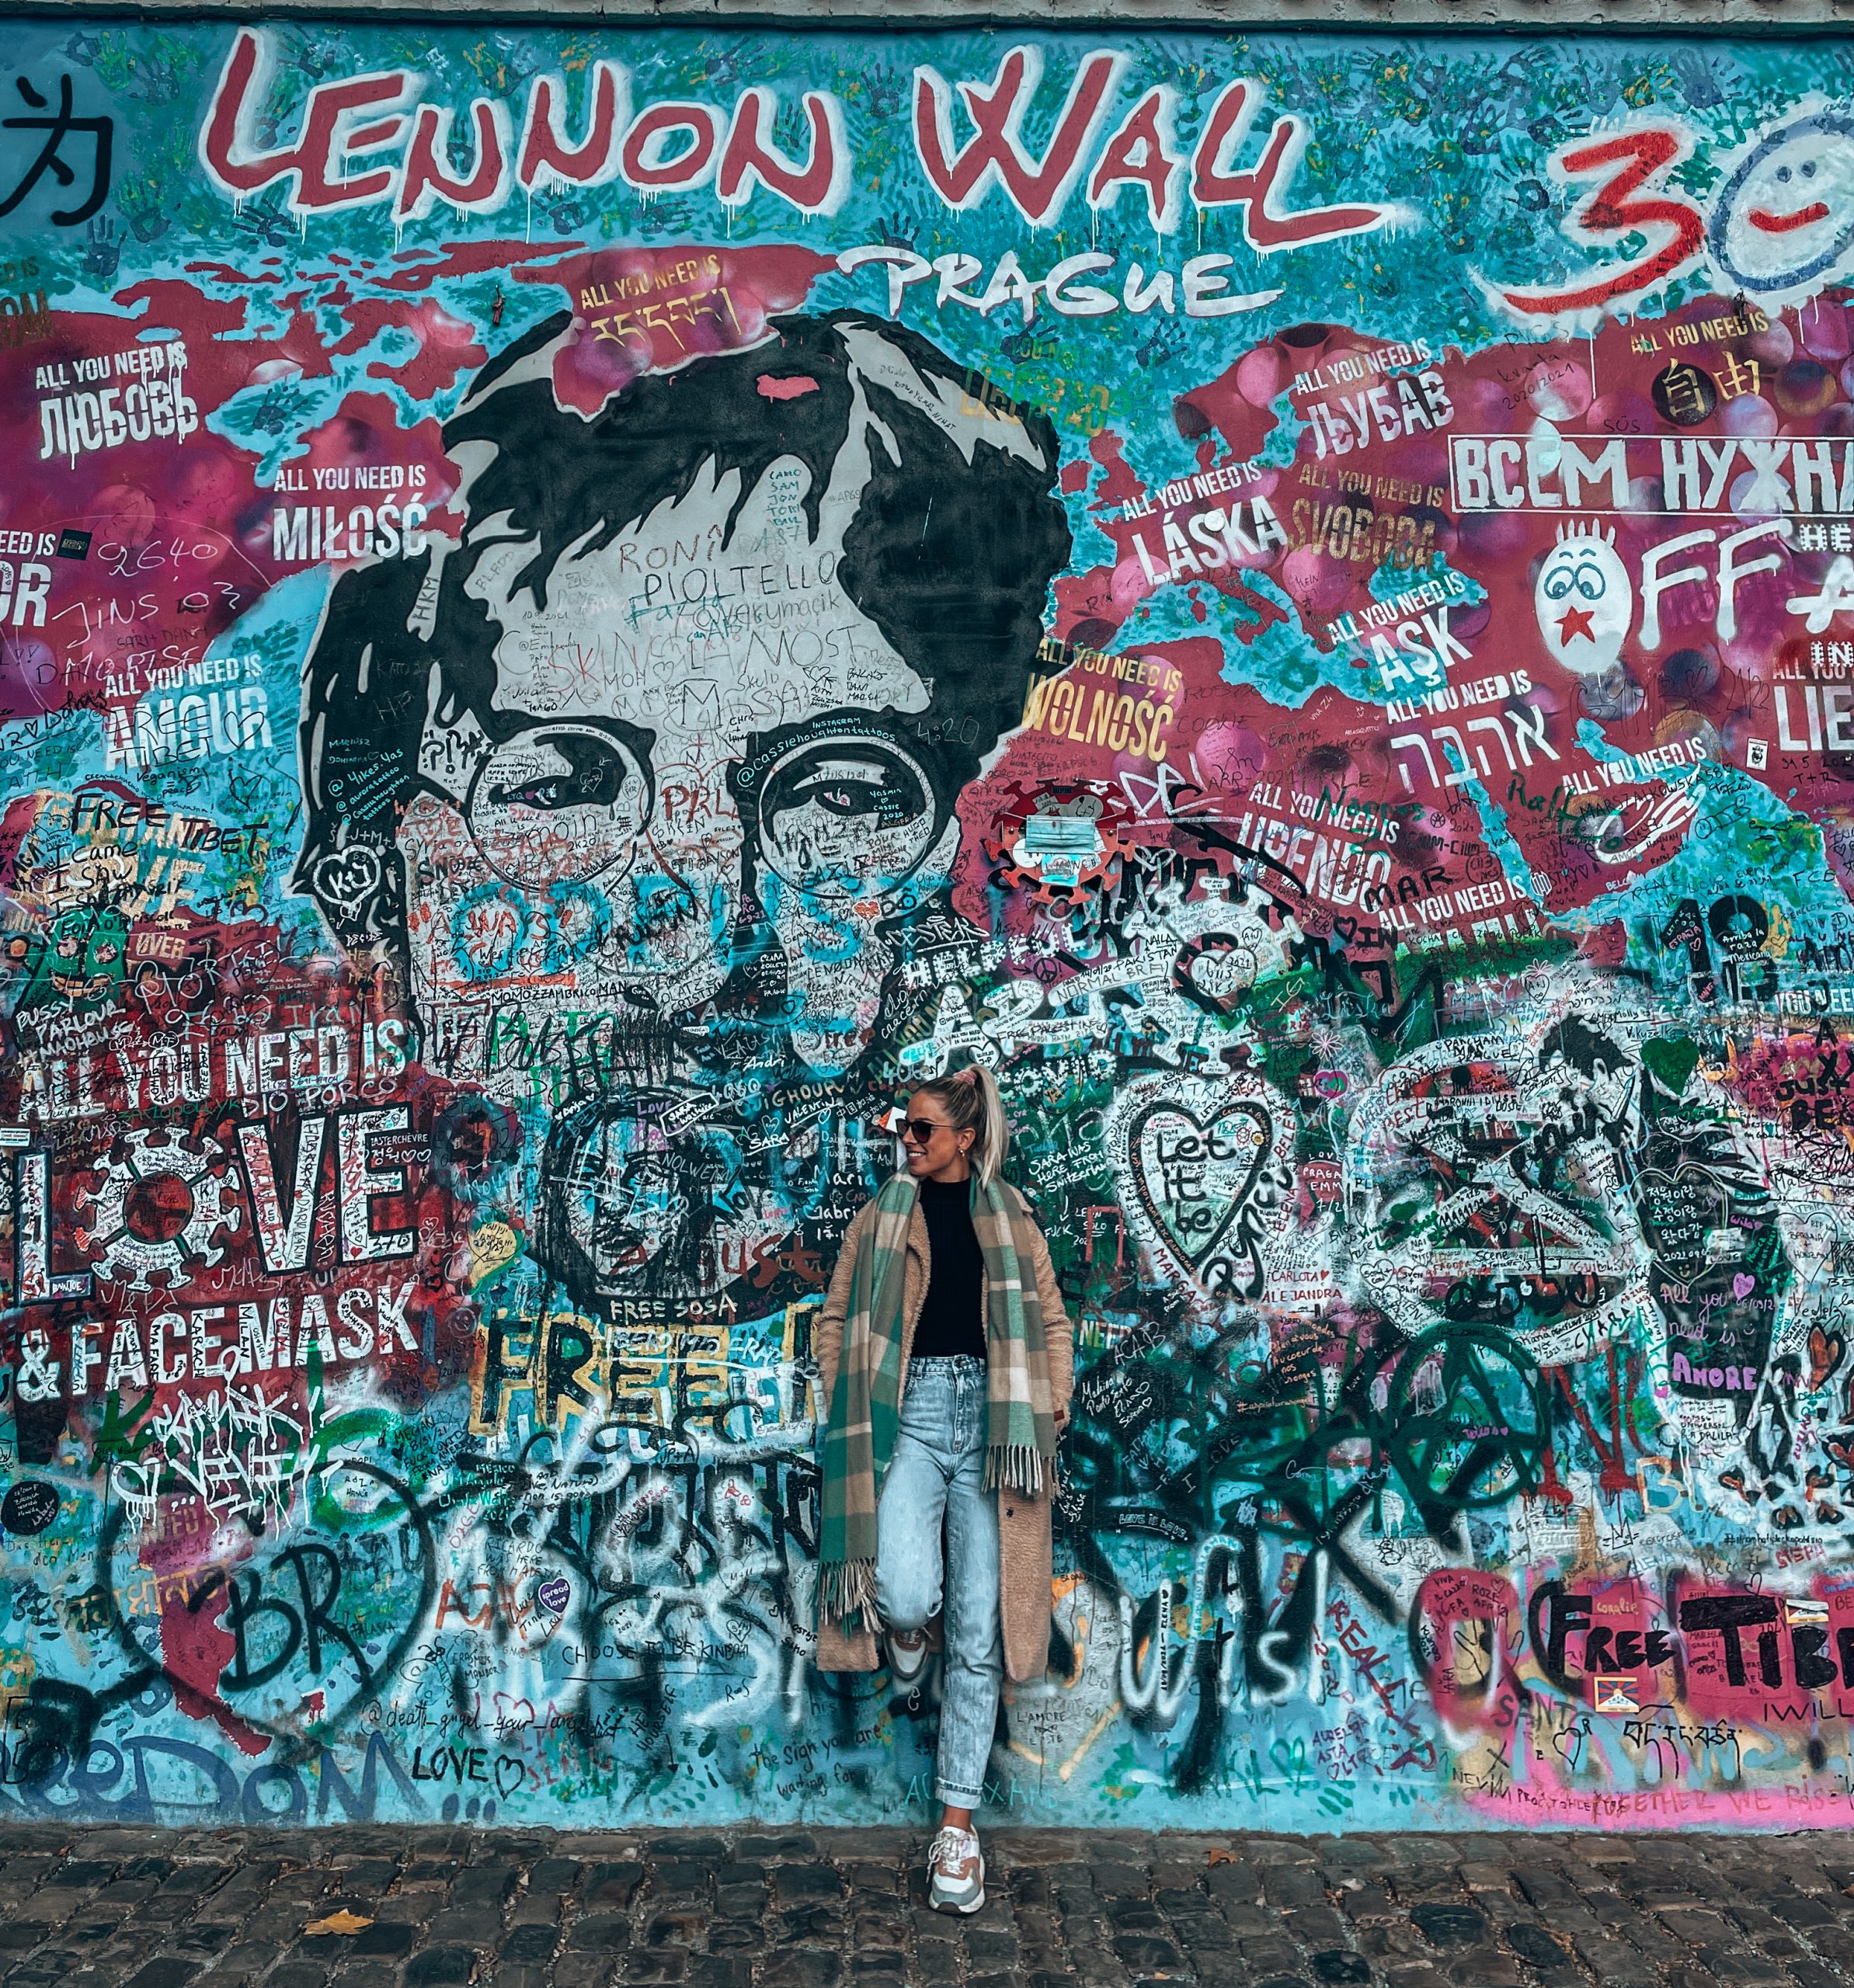 John Lennon Wall in Praag